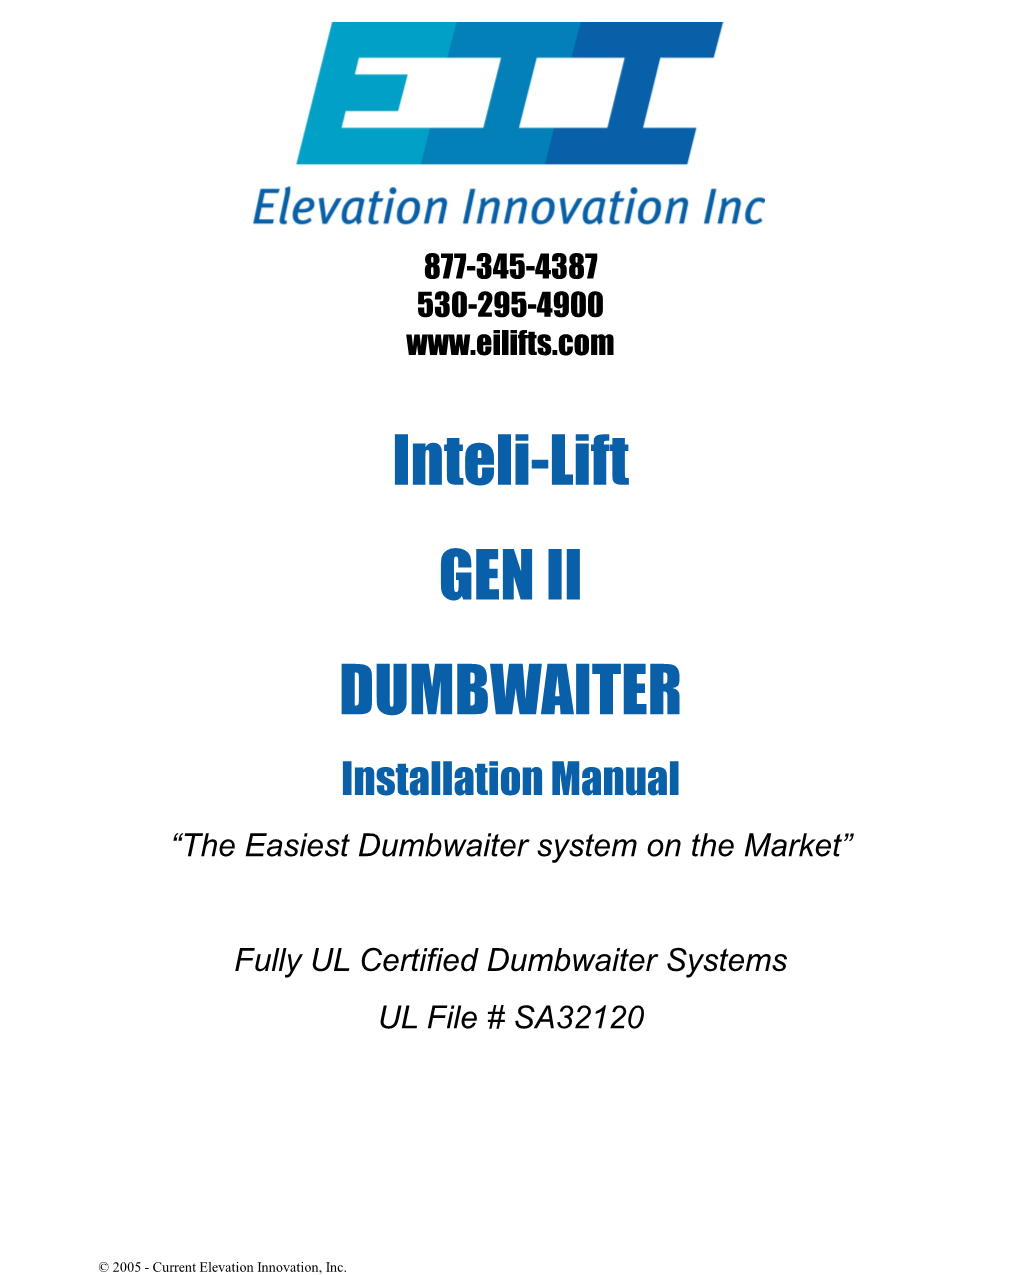 Inteli-Lift GEN II DUMBWAITER Installation Manual “The Easiest Dumbwaiter System on the Market”